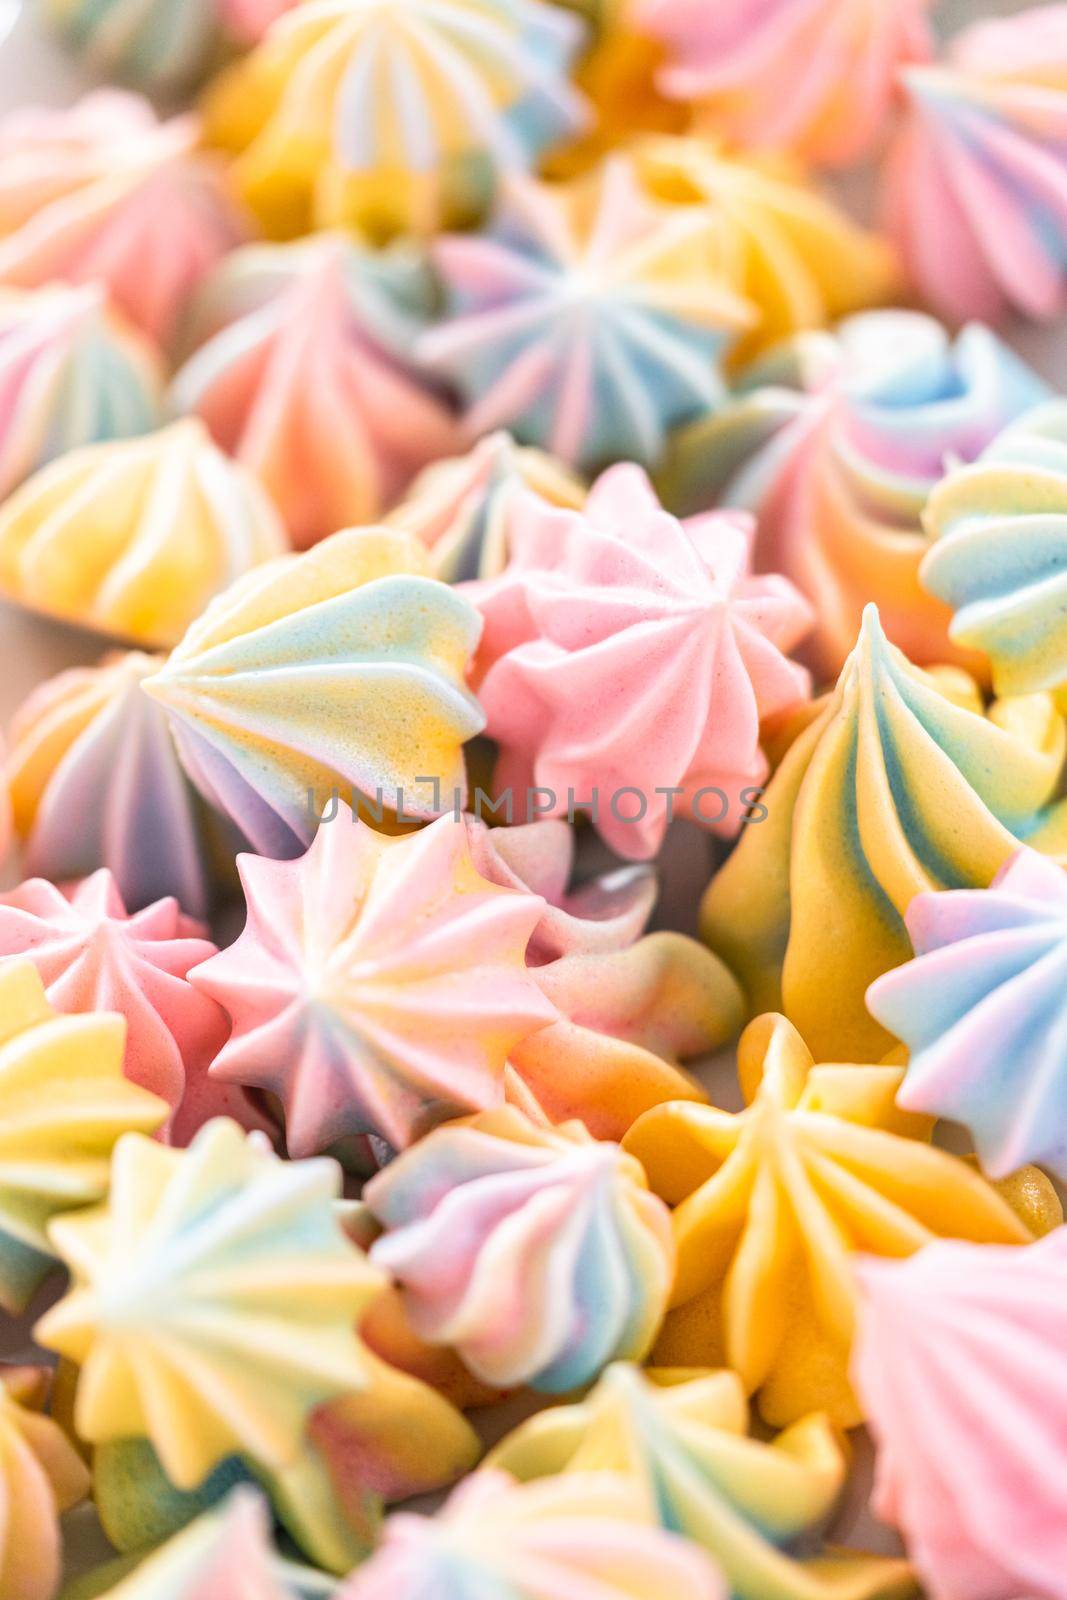 Unicorn meringue cookies by arinahabich